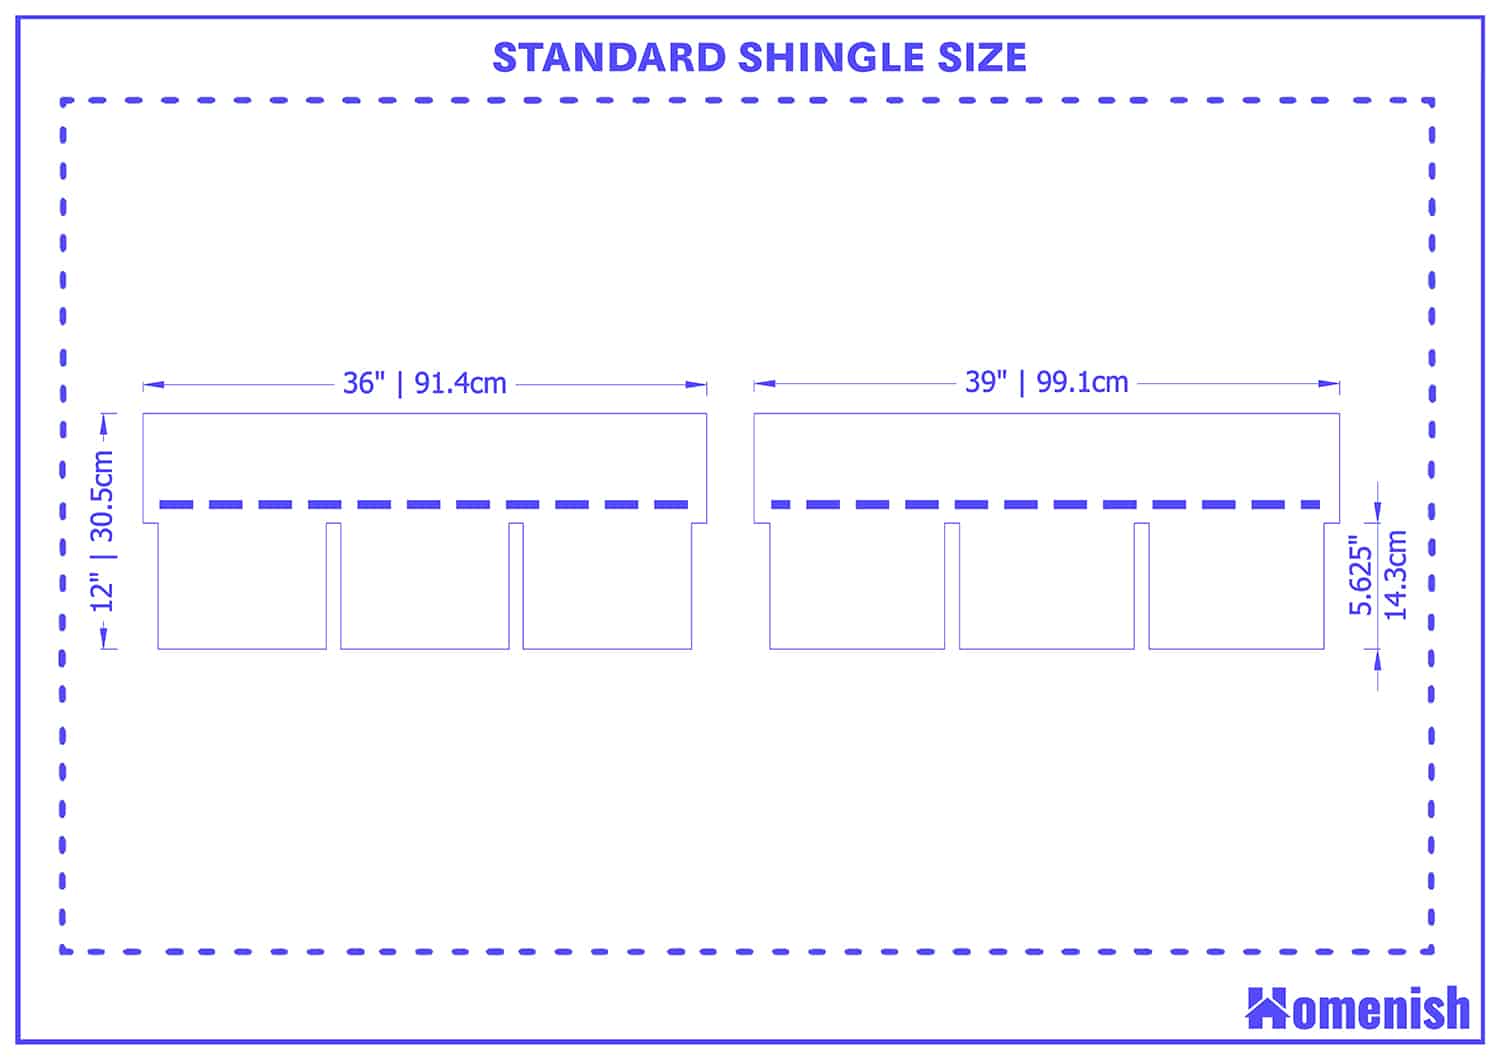 Standard shingle size